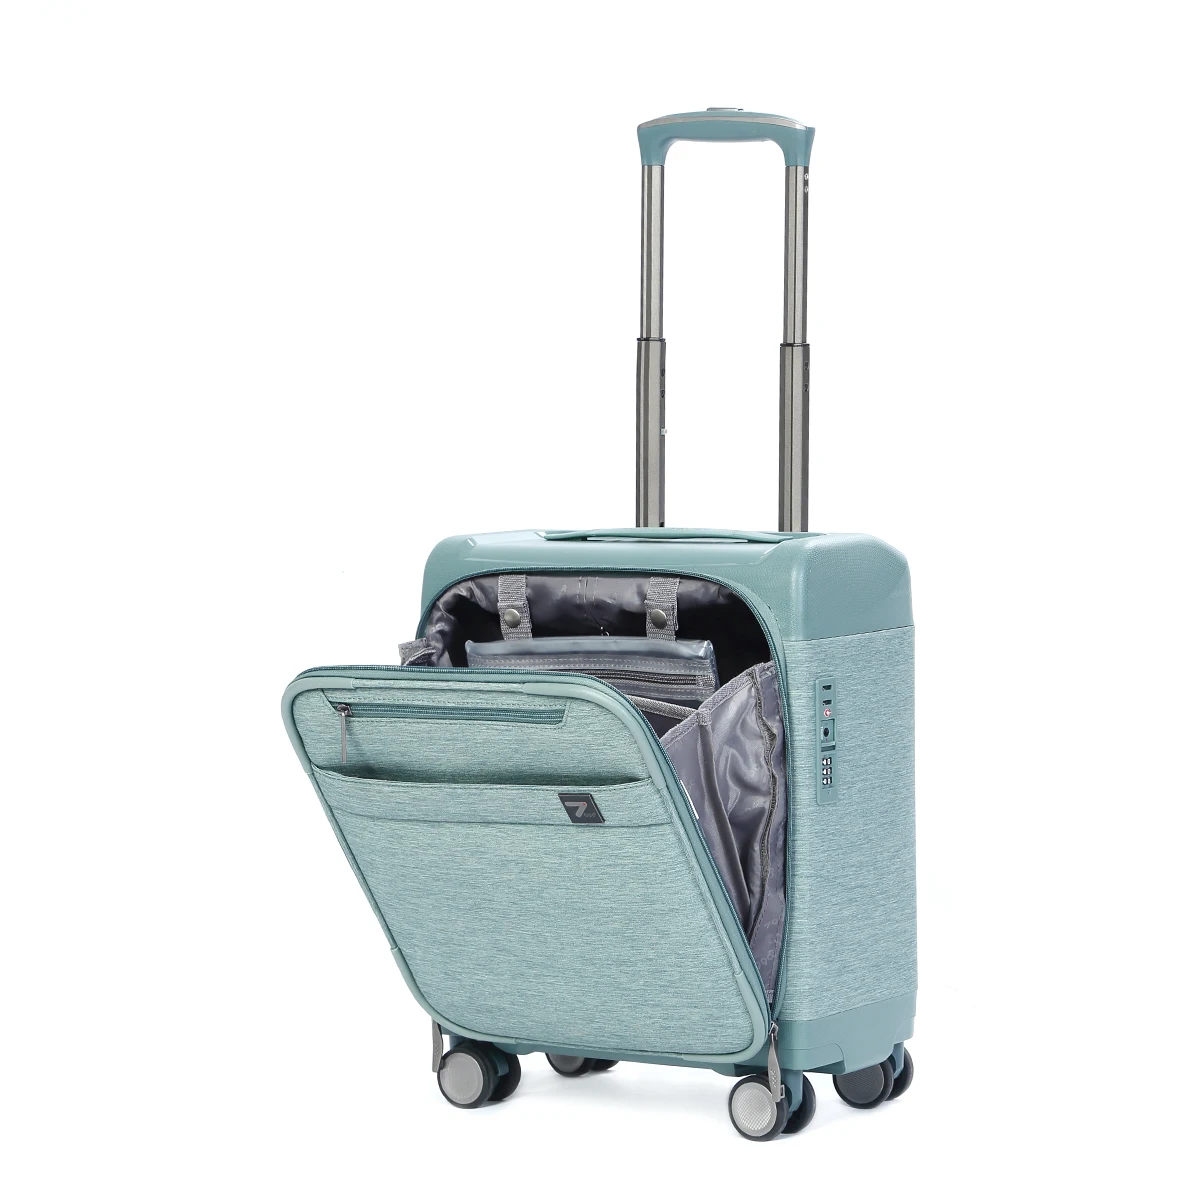 UNIWALKER Carry on Luggage Business Suitcase 16 Inch Trolley Matcha Green TSA Password Lock